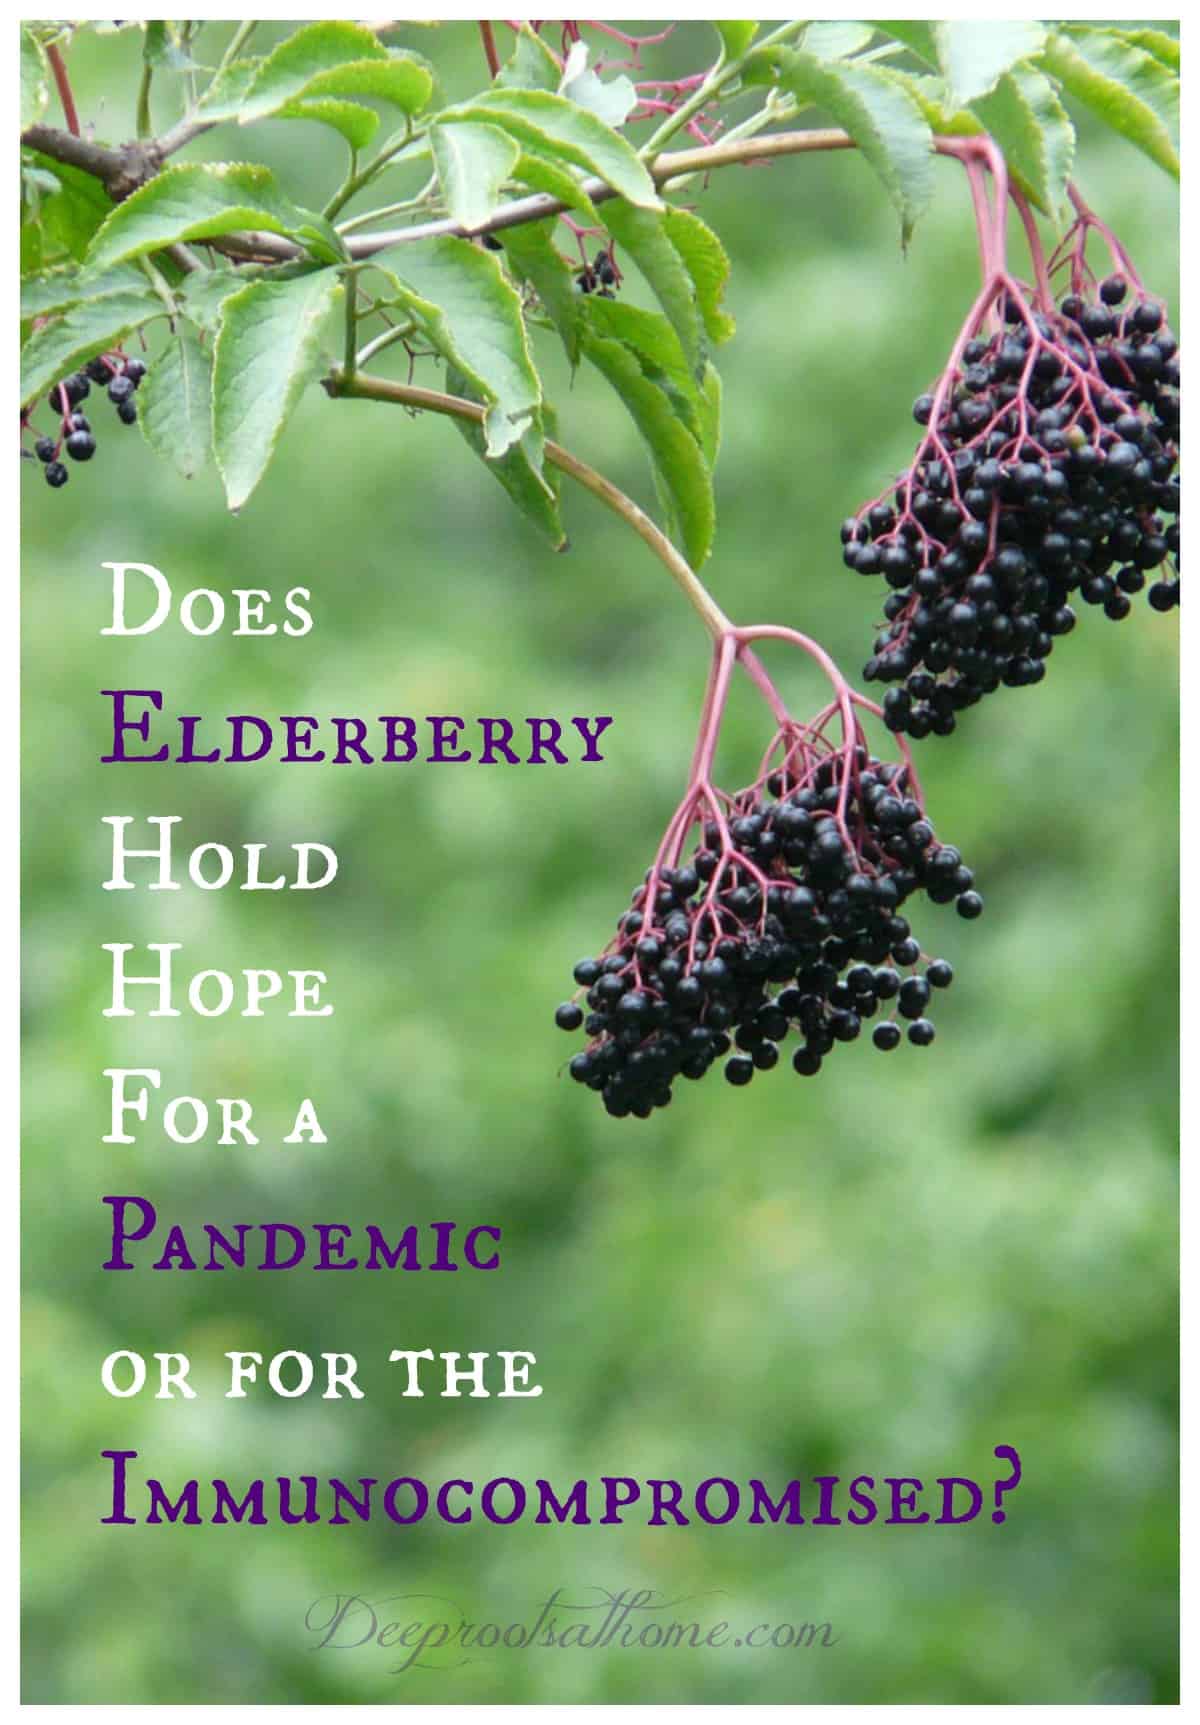 Does Elderberry Hold Hope For a Pandemic or for the Immunocompromised? Ripe elderberry fruit (sambucus nigra)